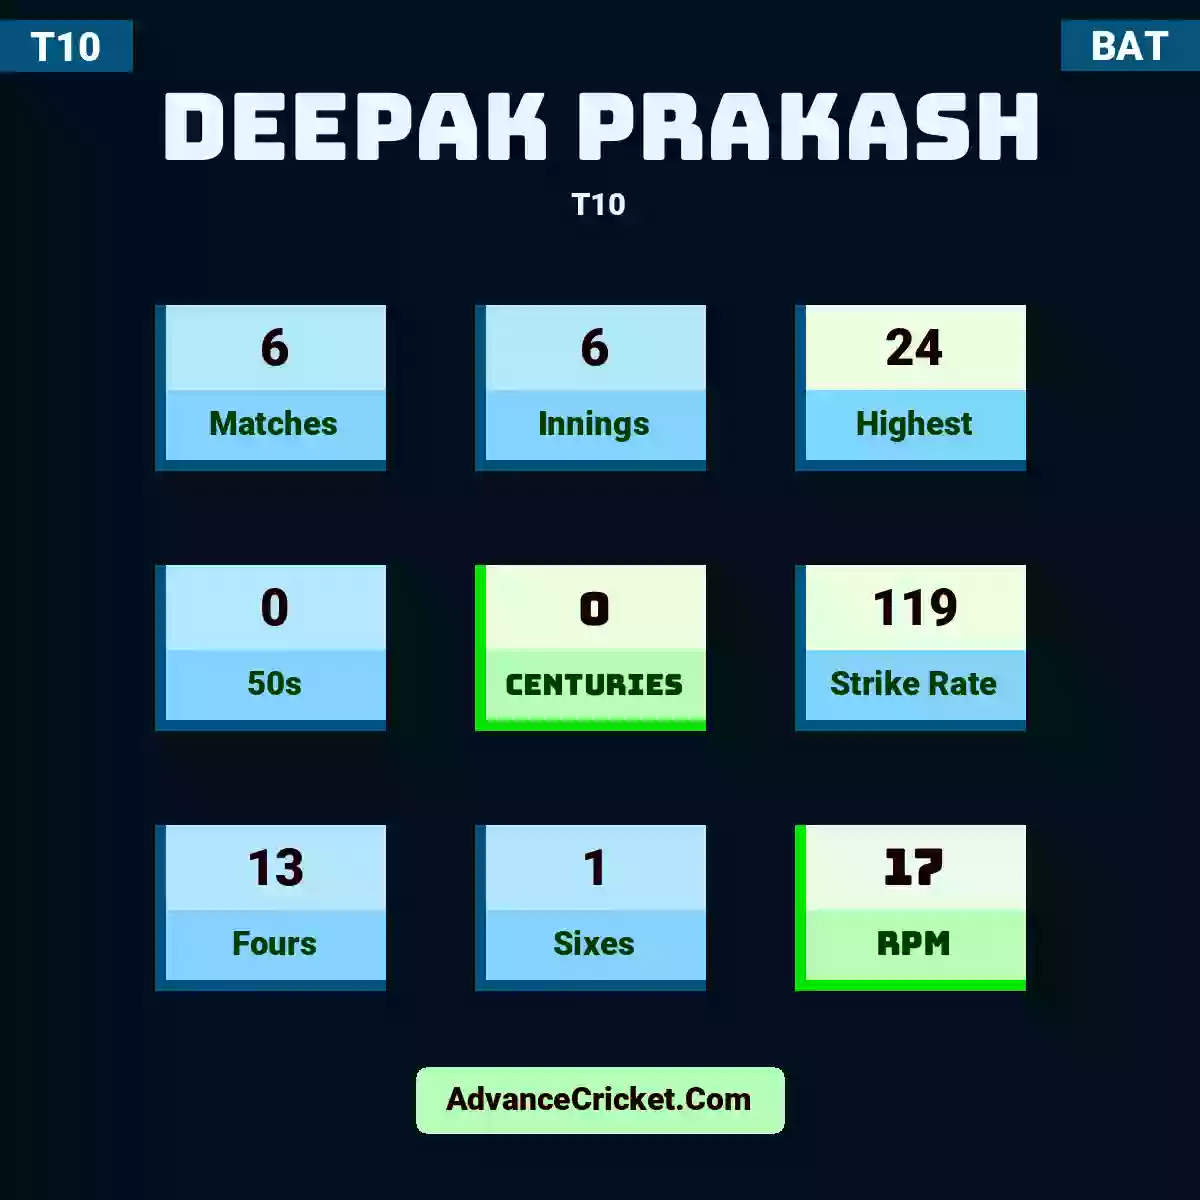 Deepak prakash T10 , Deepak prakash played 6 matches, scored 24 runs as highest, 0 half-centuries, and 0 centuries, with a strike rate of 119. D.prakash hit 13 fours and 1 sixes, with an RPM of 17.